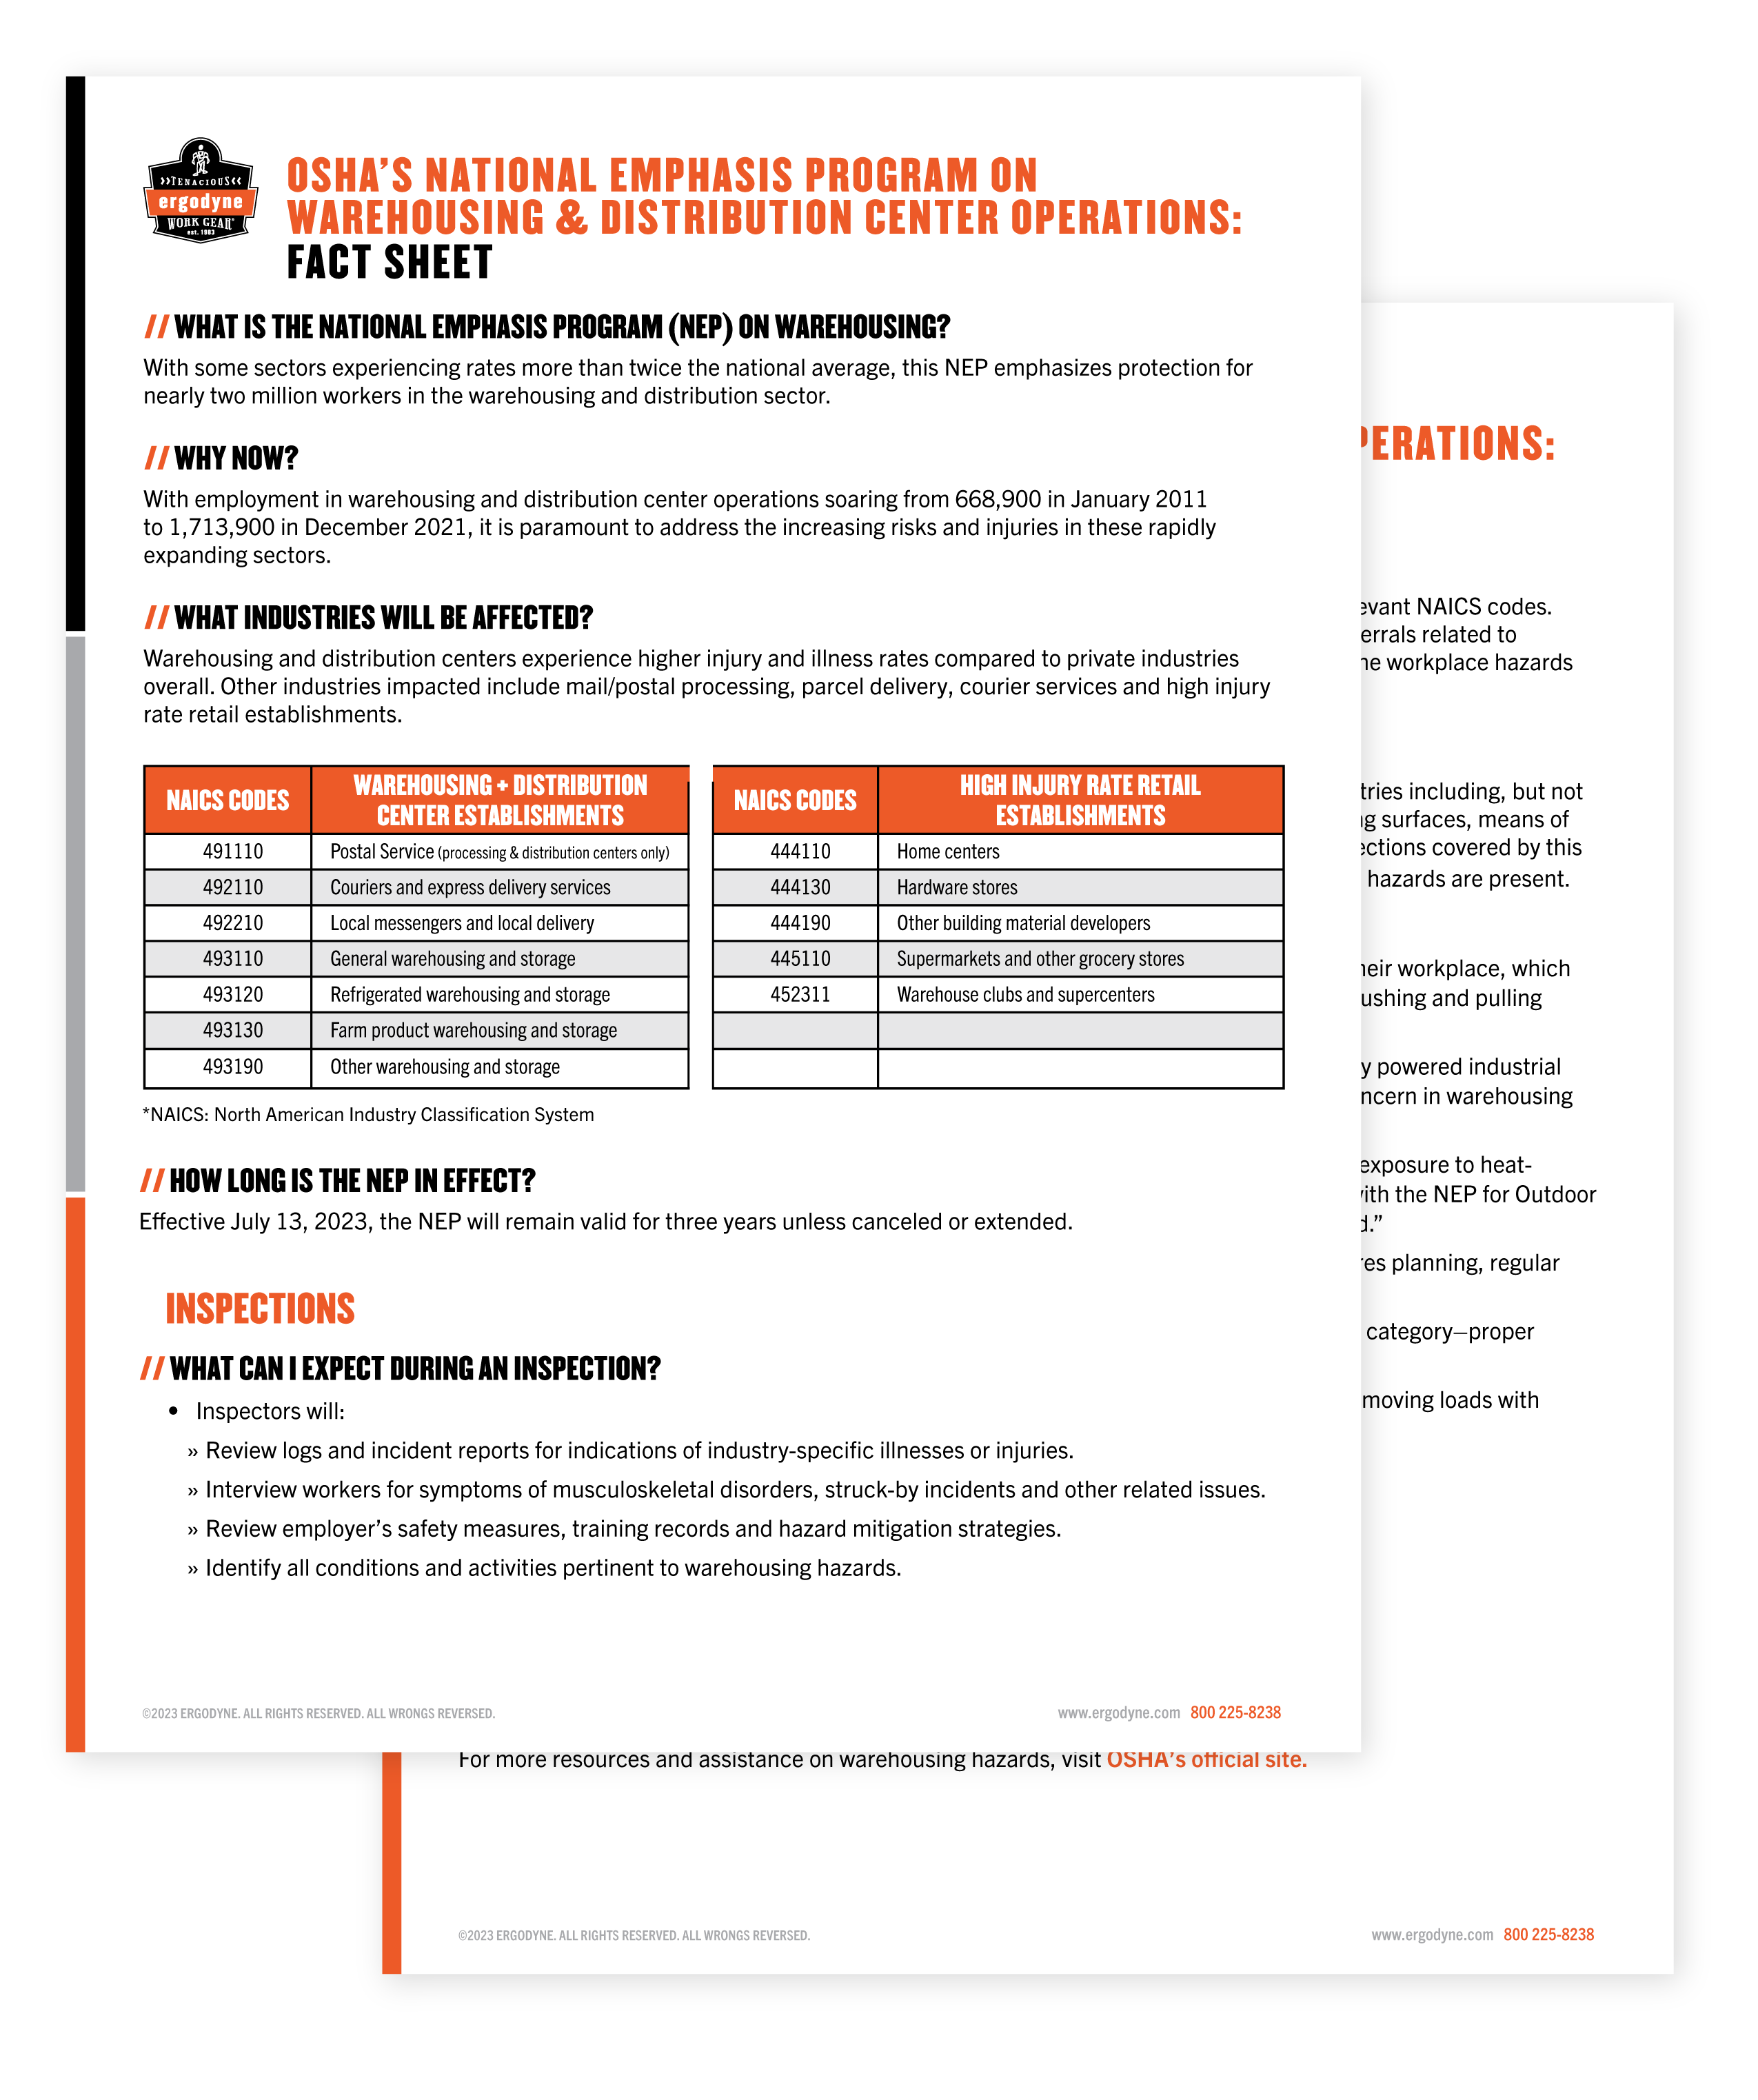 Ergodyne's OSHA Warehouse & Distributor NEP Fact Sheet